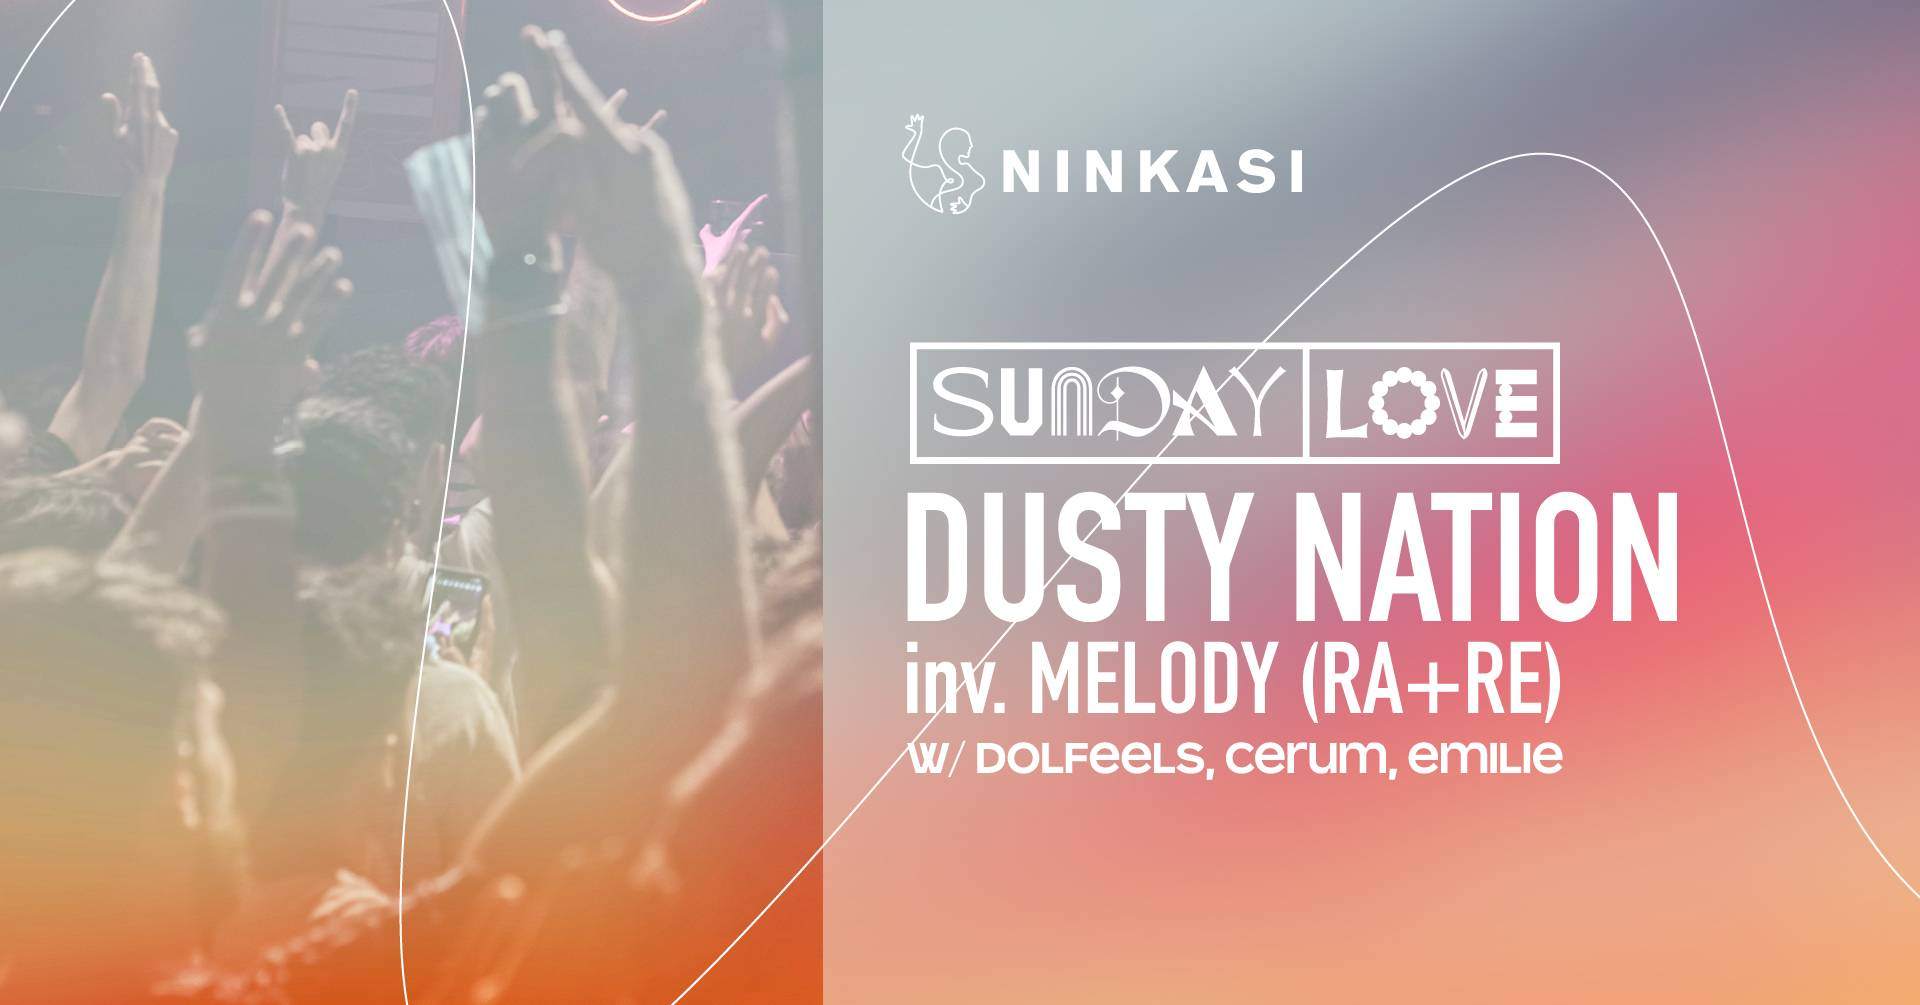 Sunday Love • Dusty Nation inv. Melody (RA+RE) - Página trasera